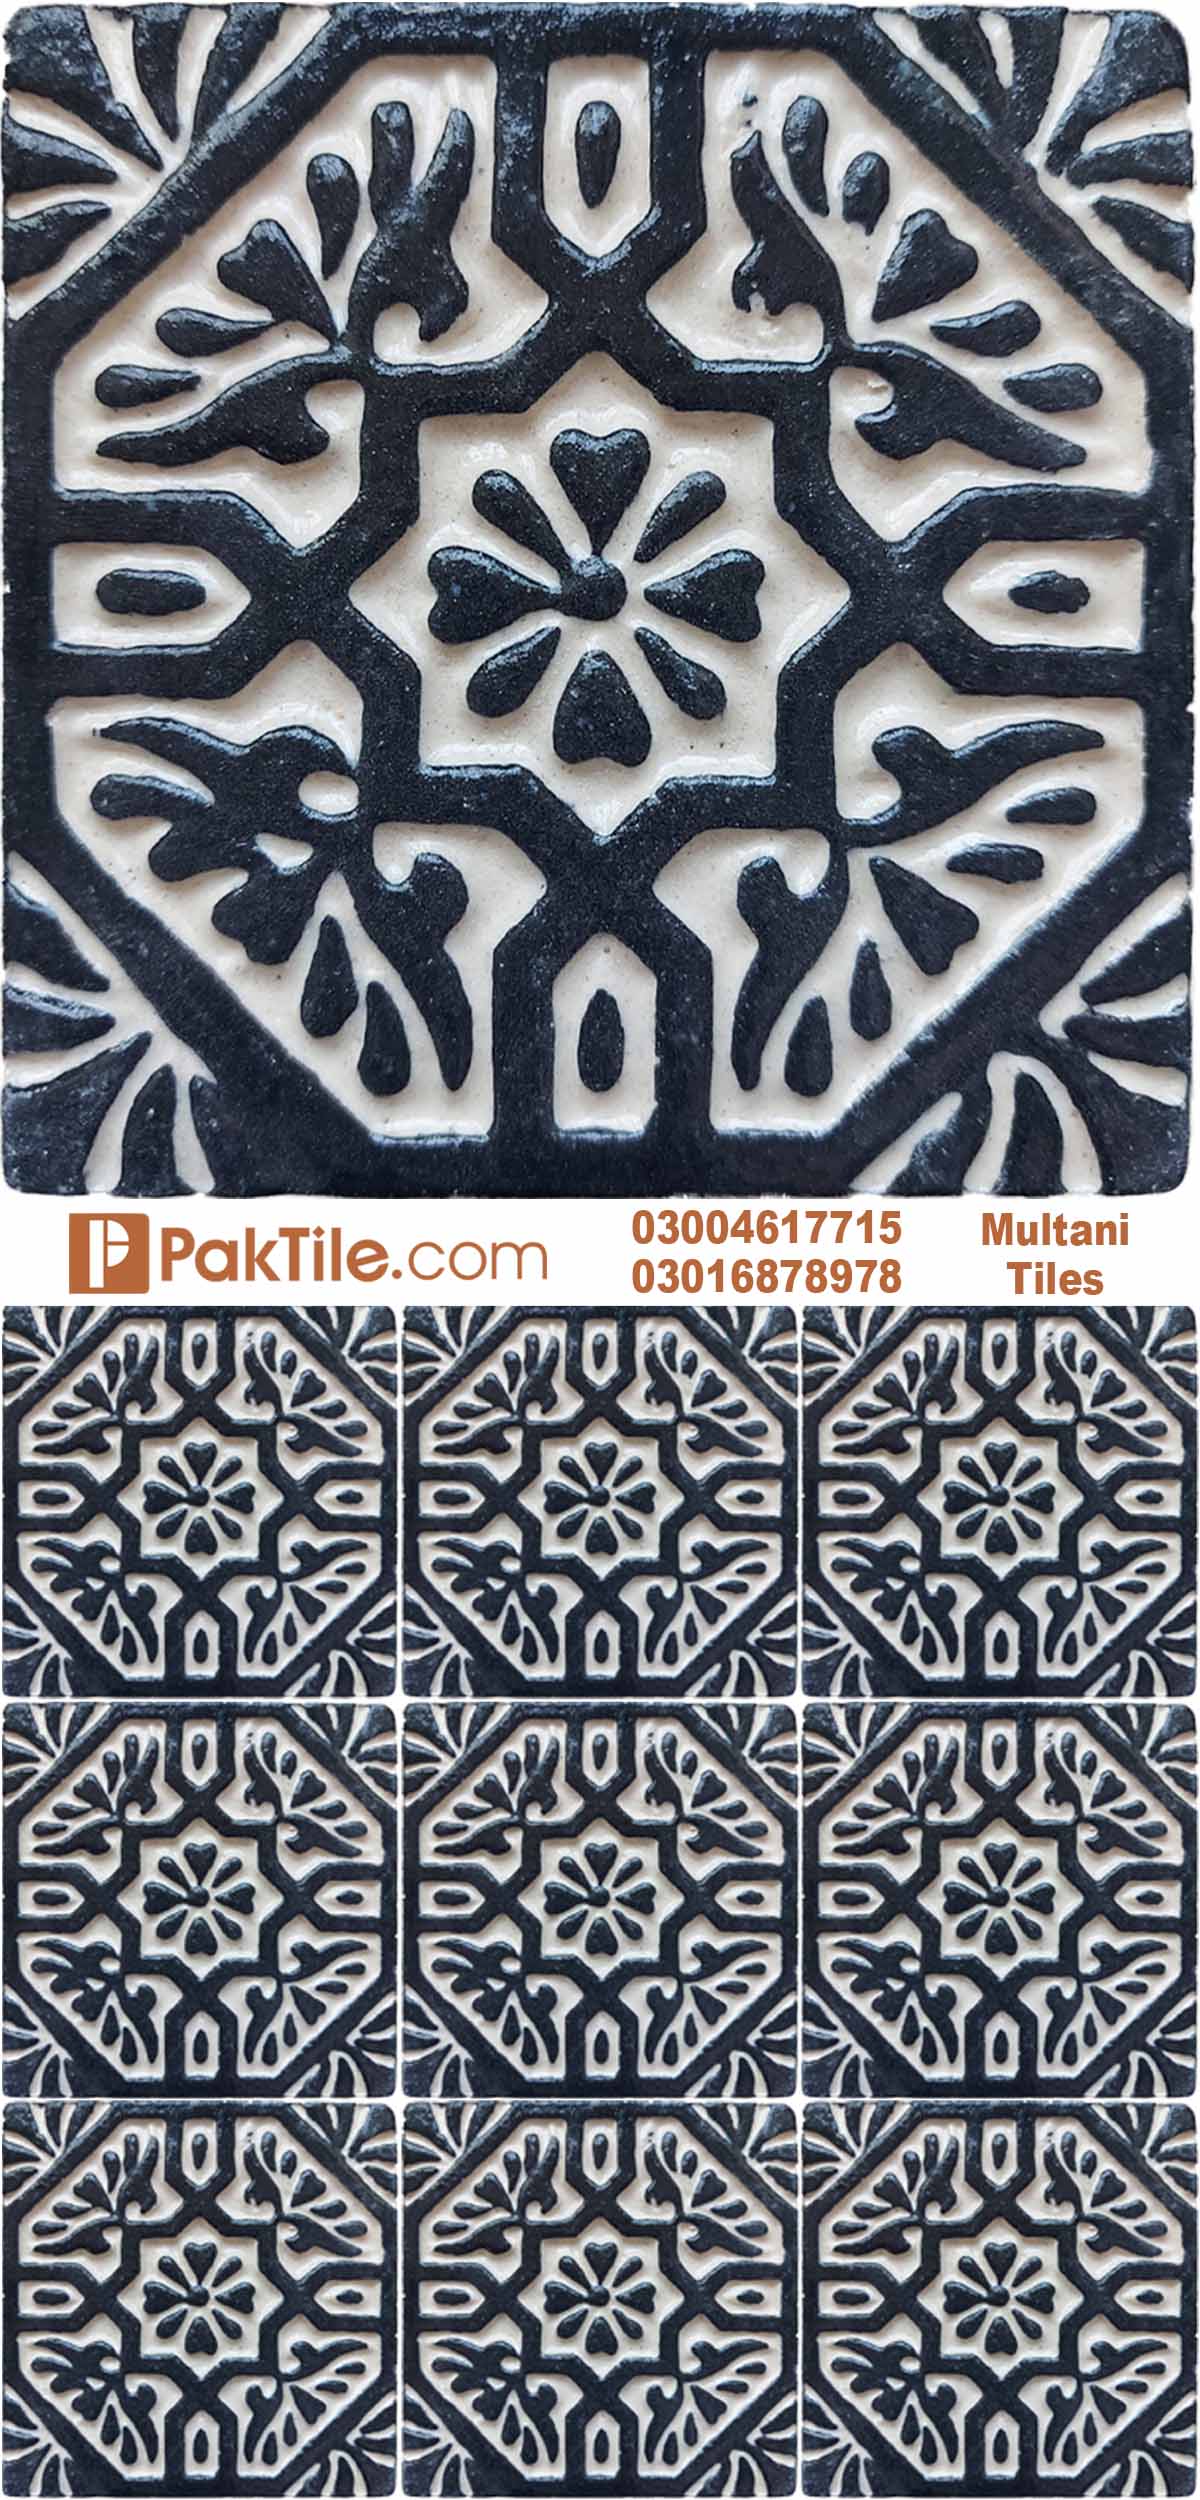 Pak Clay Multani Mosaic Tiles Design